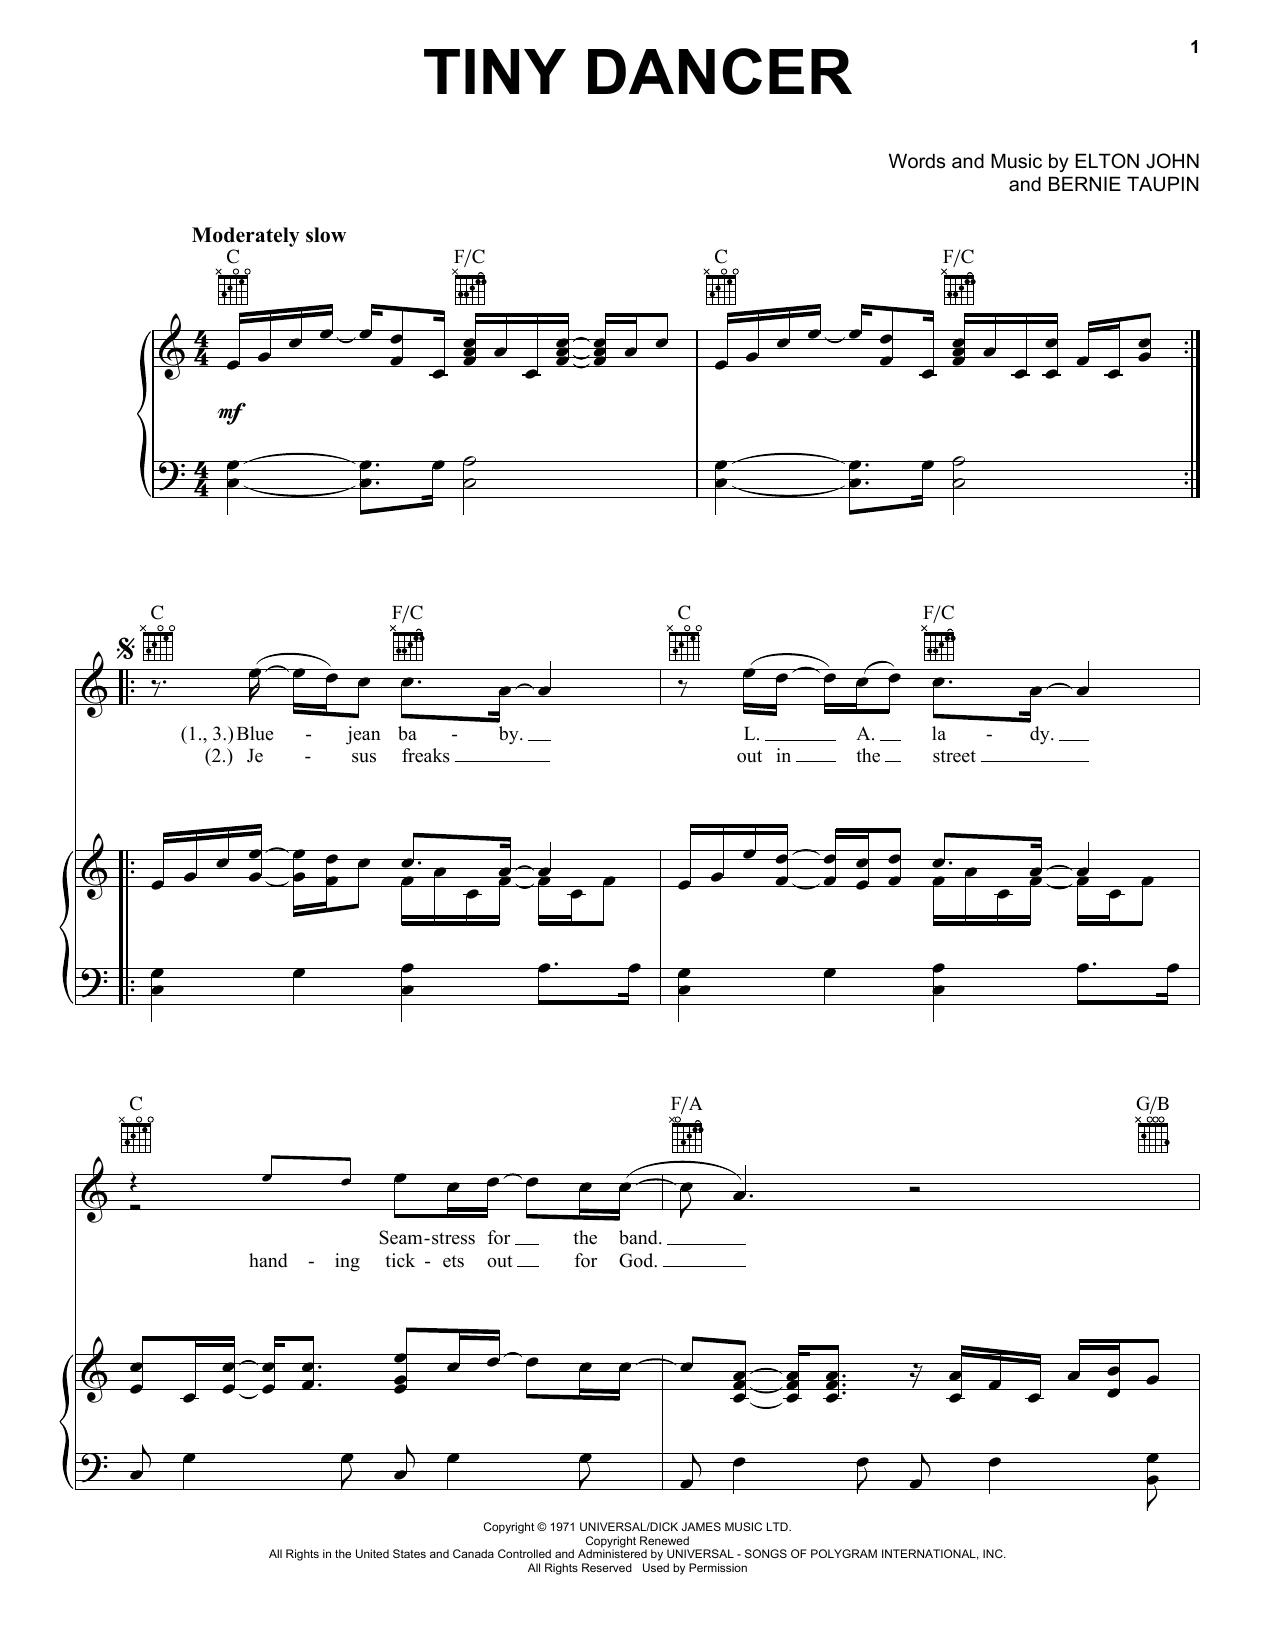 Elton John Tiny Dancer Sheet Music Notes & Chords for Ukulele - Download or Print PDF